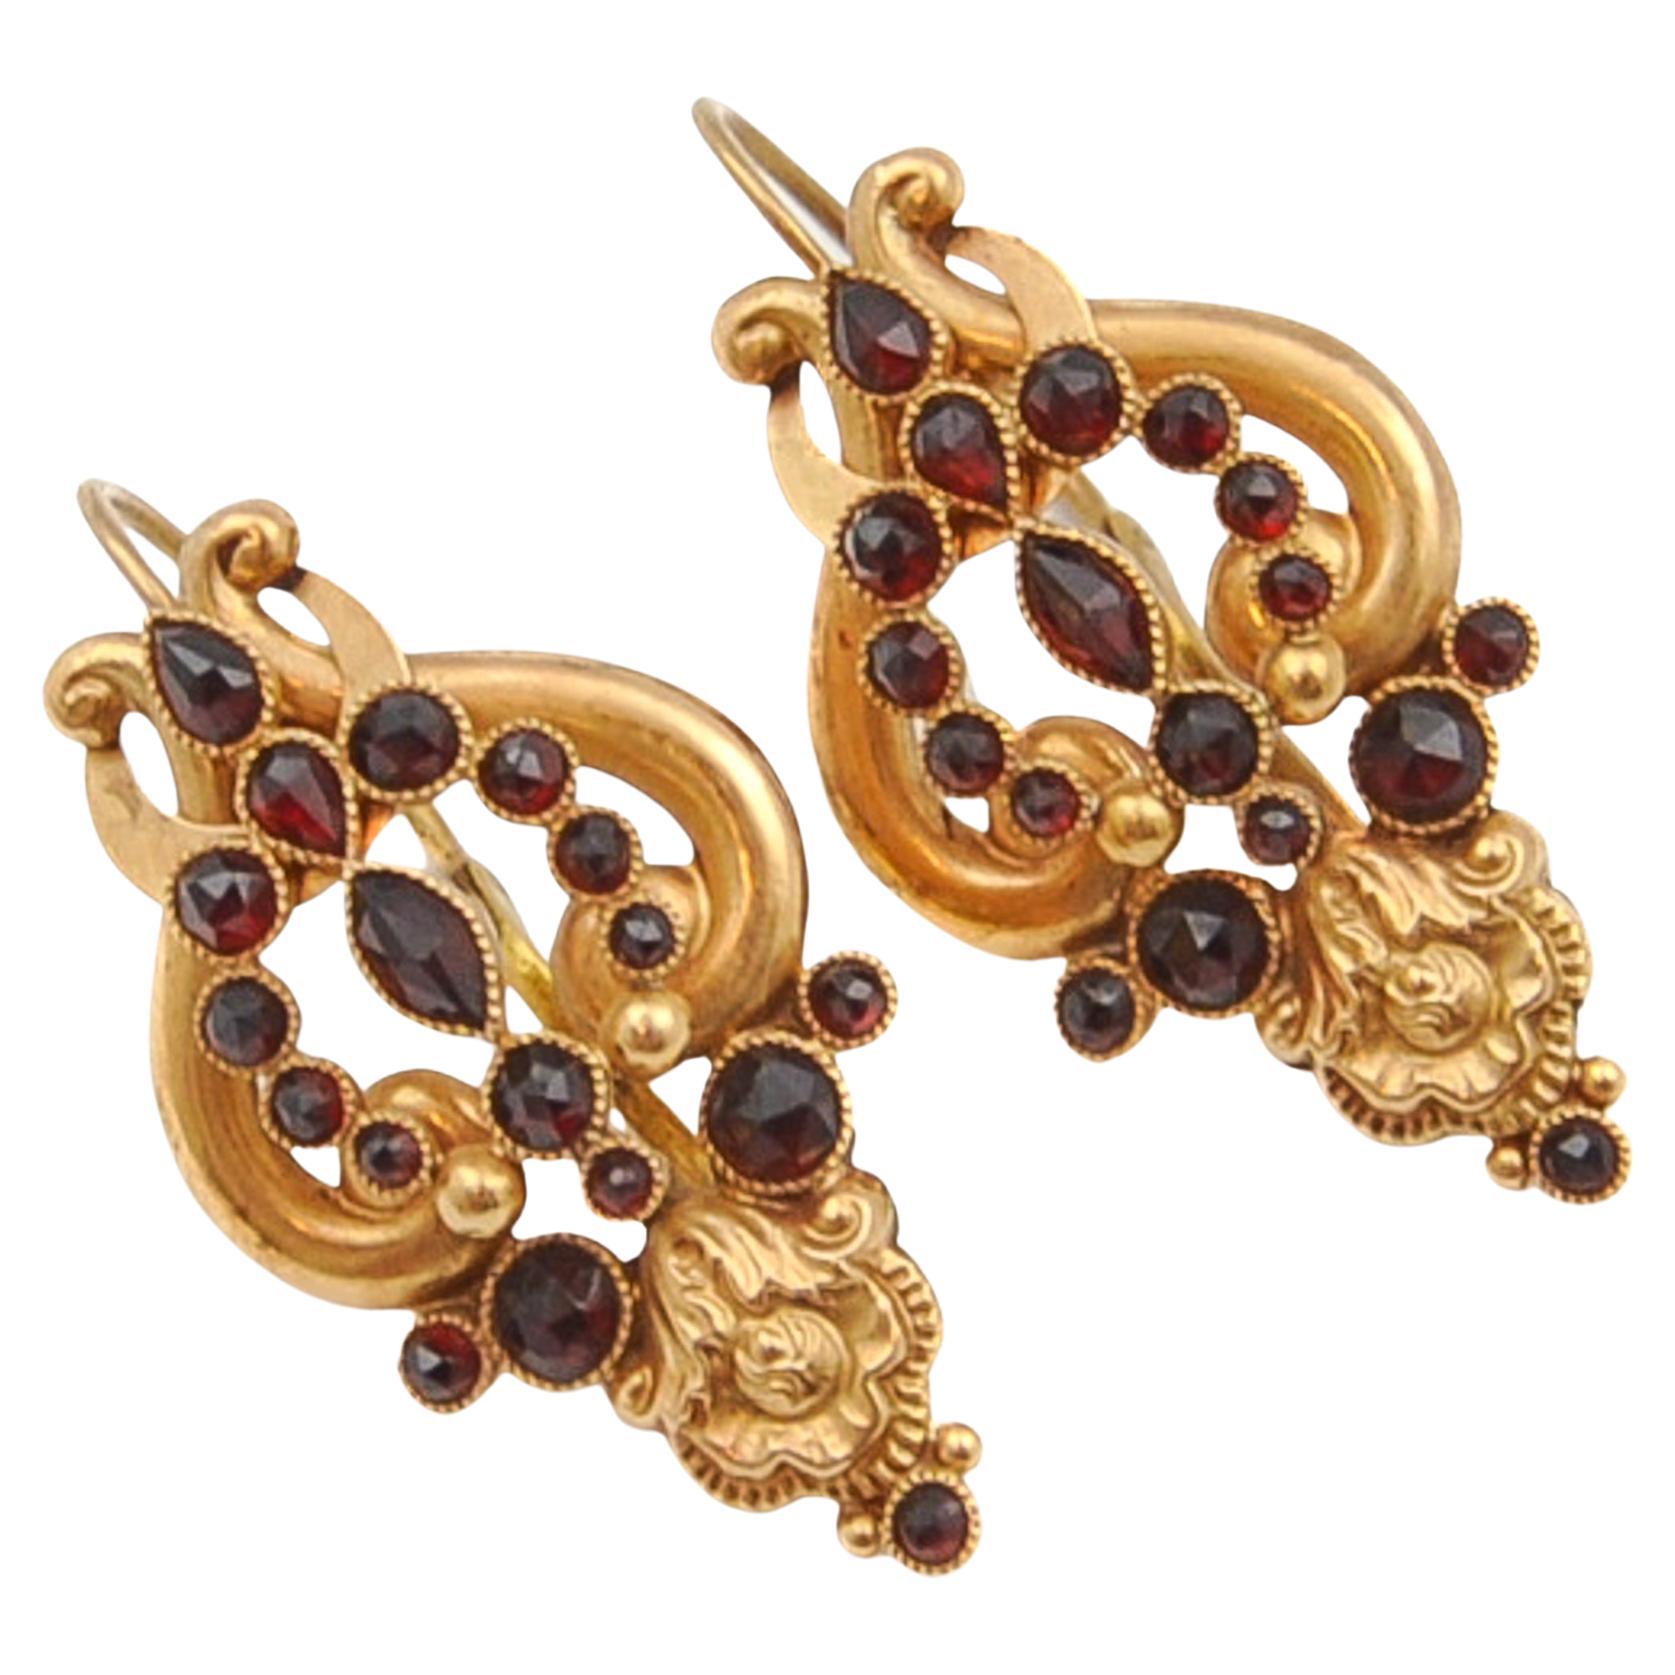 BIG 6cm CHANDELIER ornate gypsy EARRINGS boho BALLS retro filigree ANTIQUE  GOLD | eBay